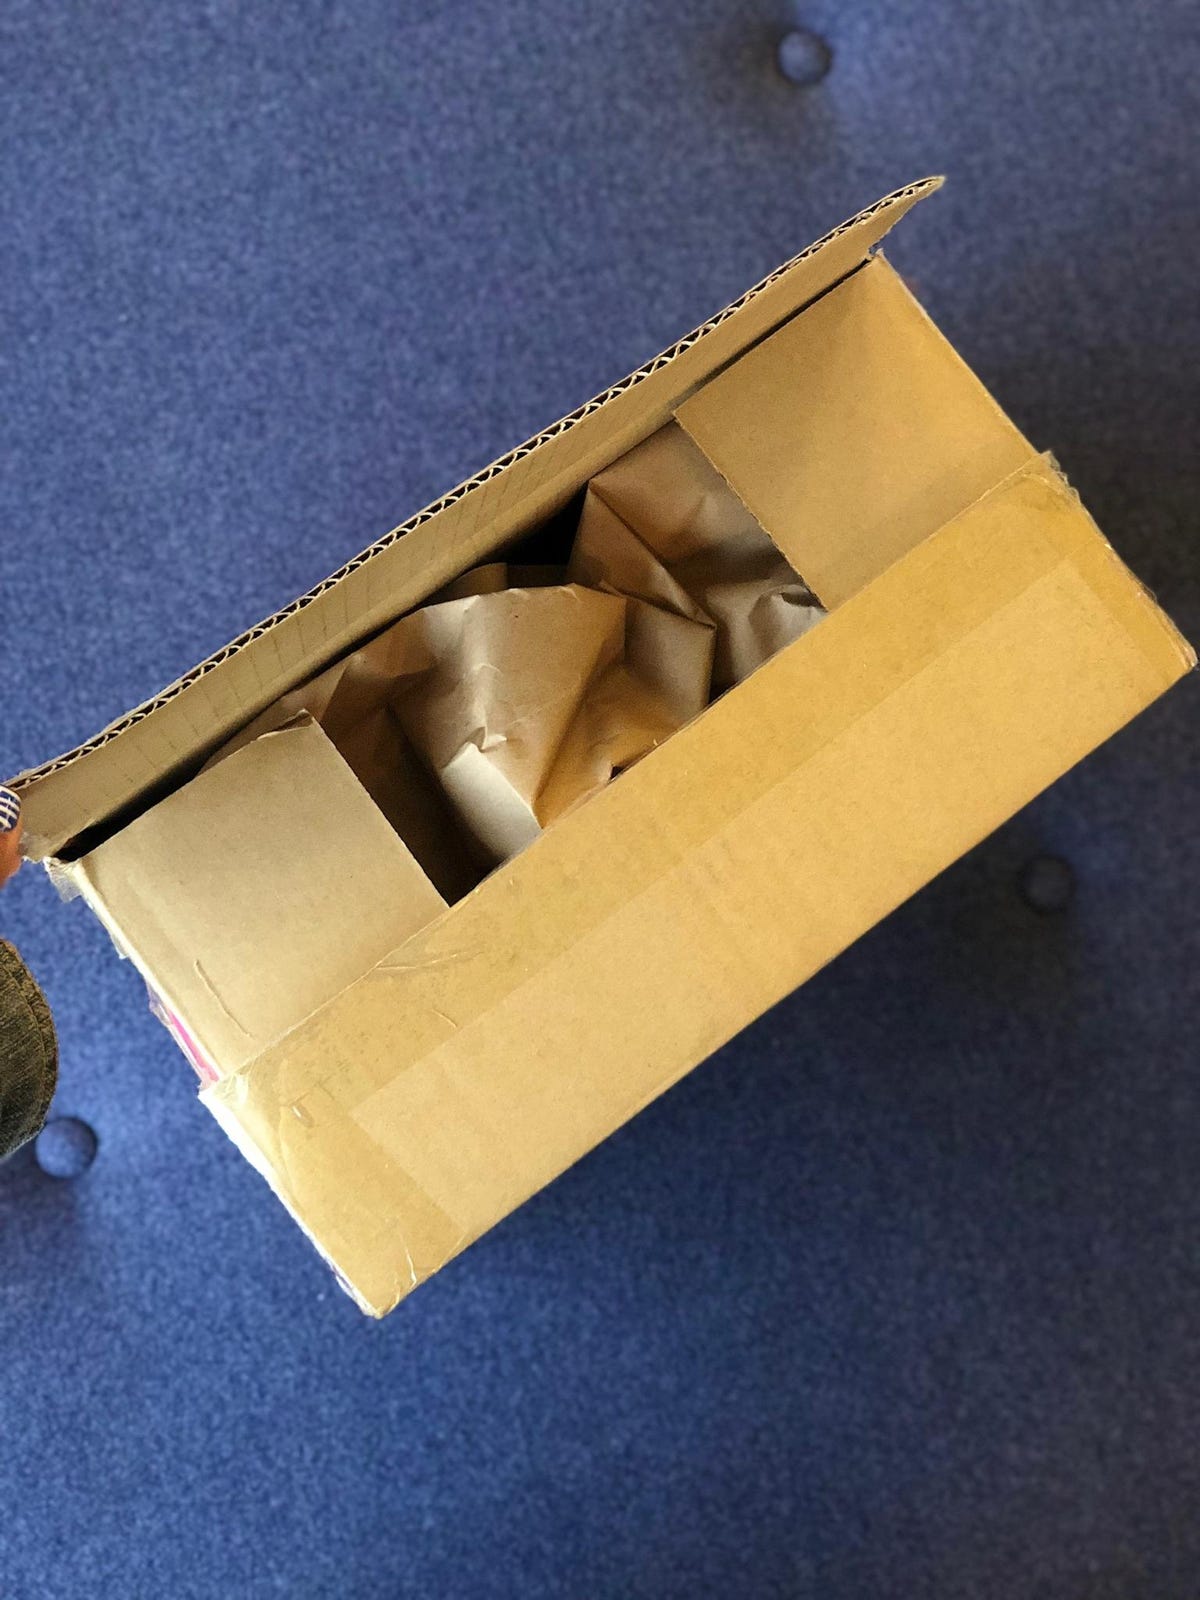 box-almost-open